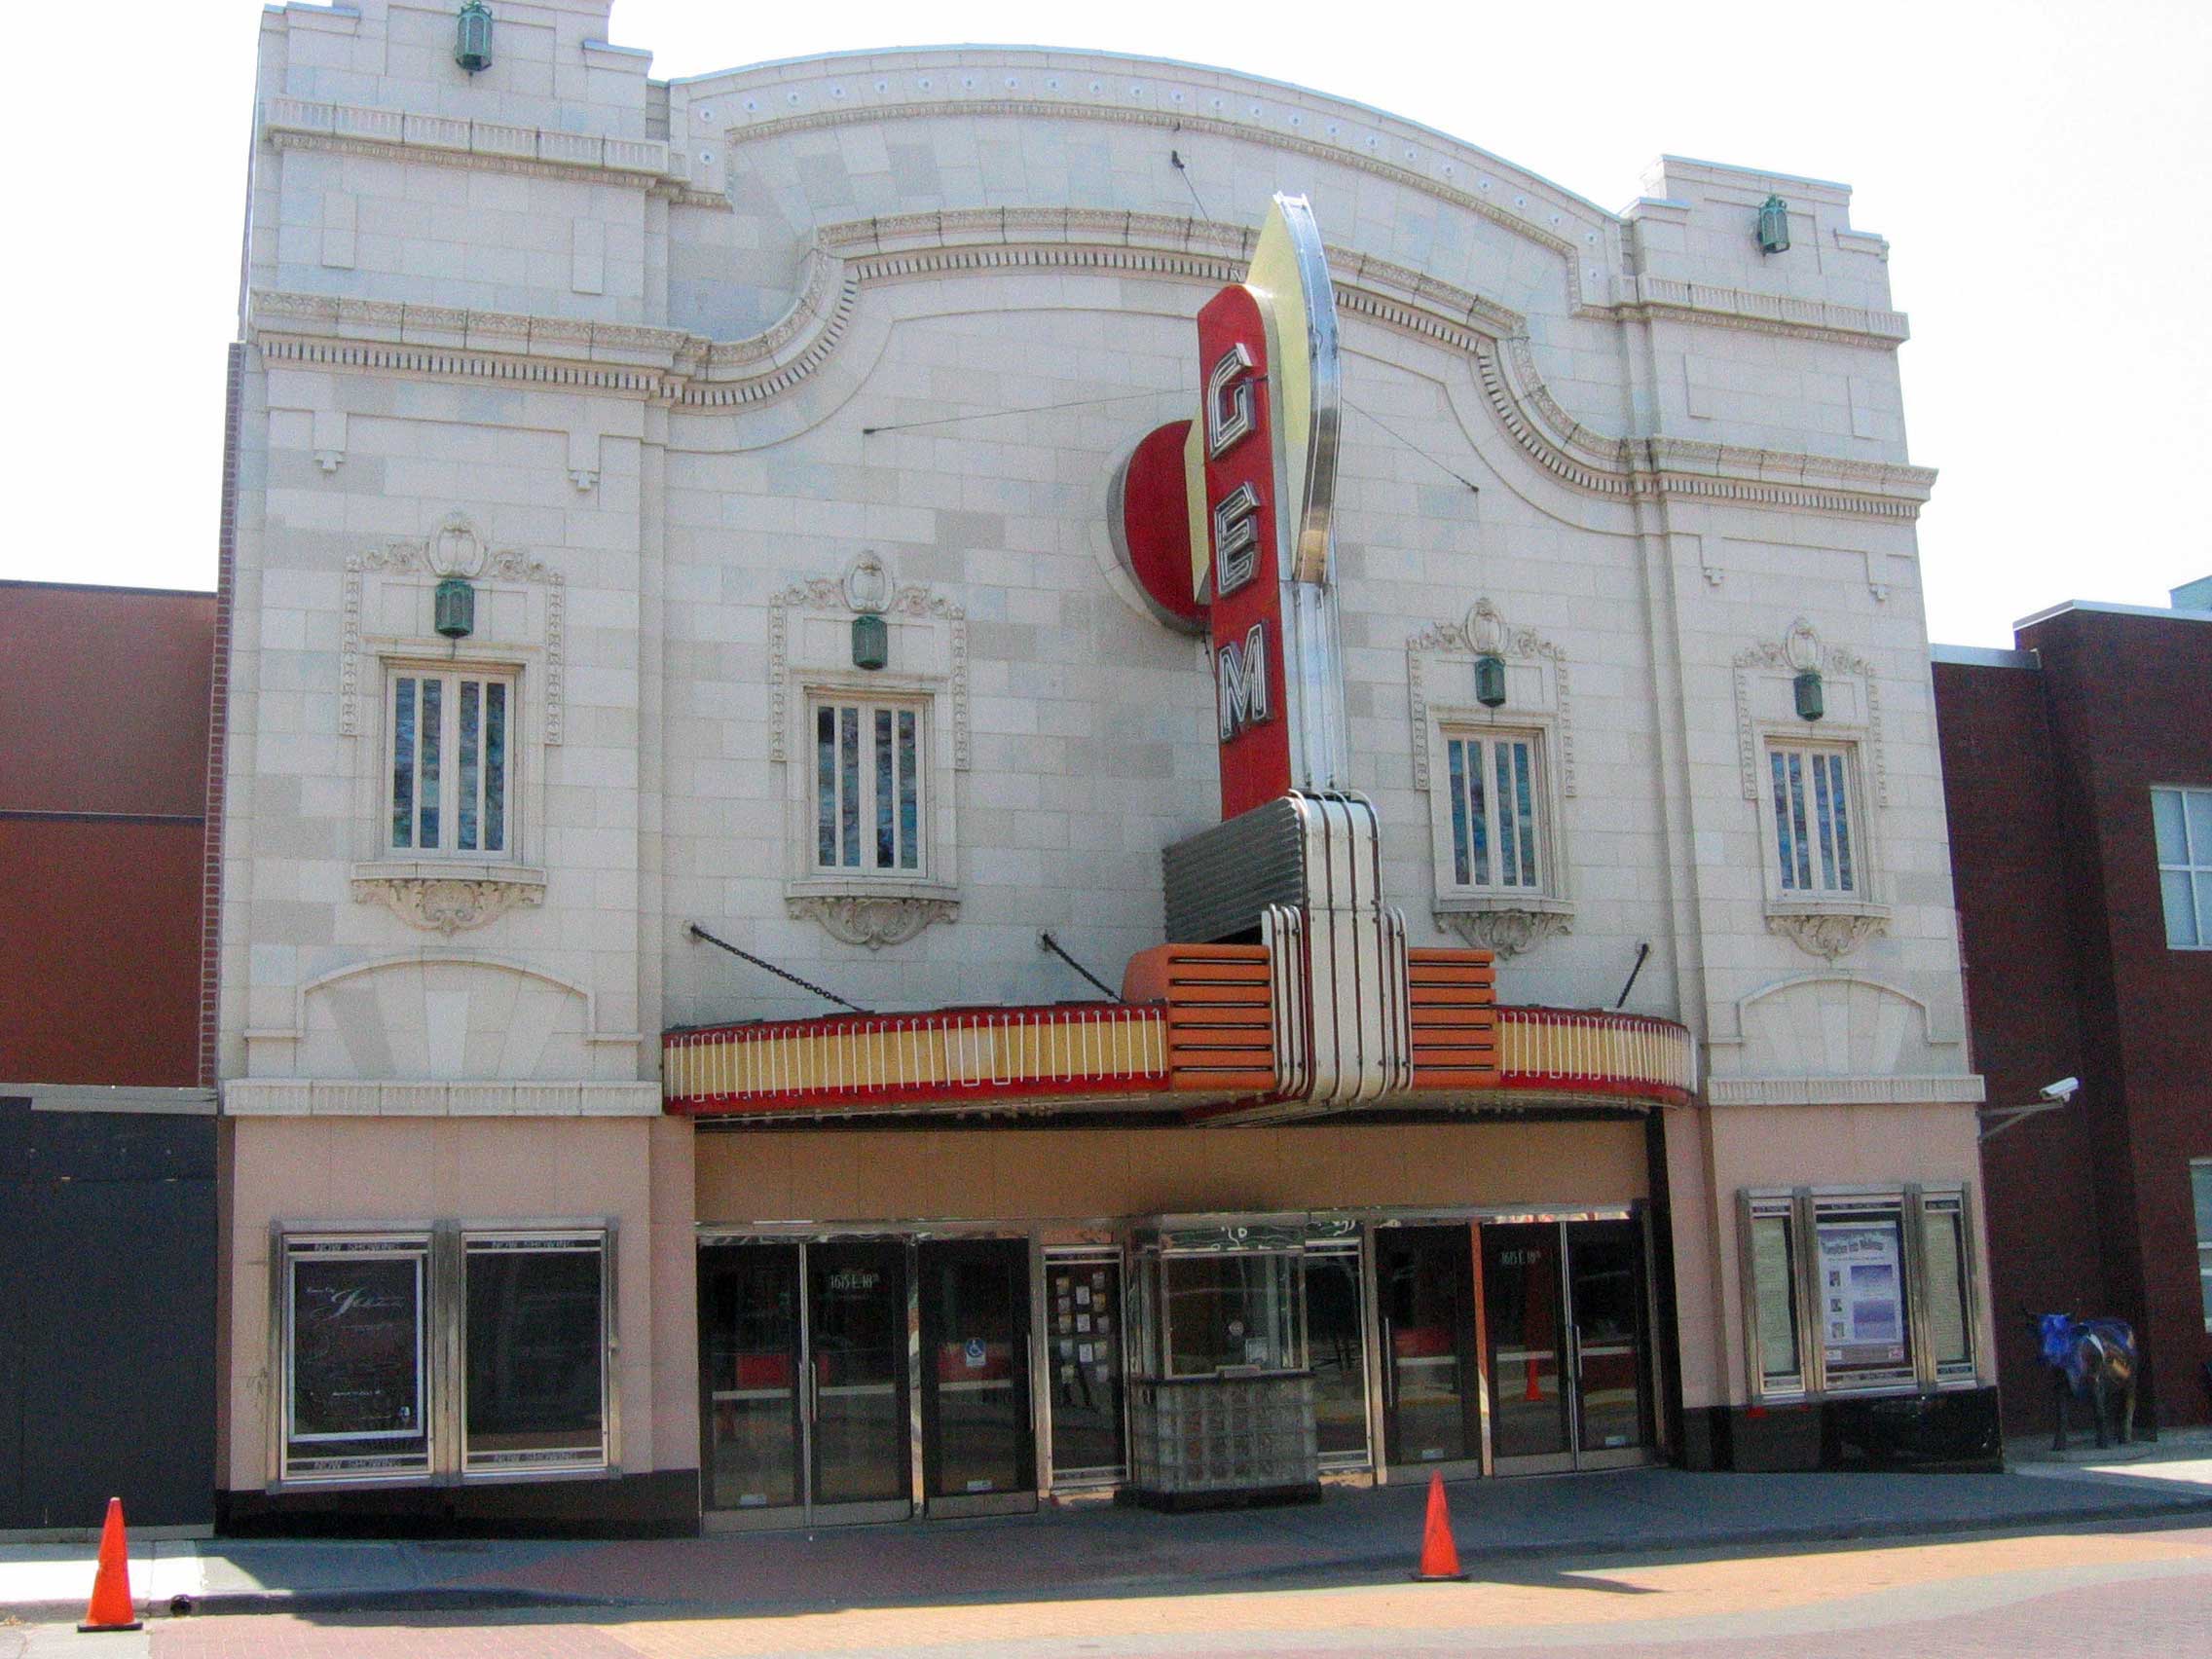 The Gem Theatre in Kansas City, MO